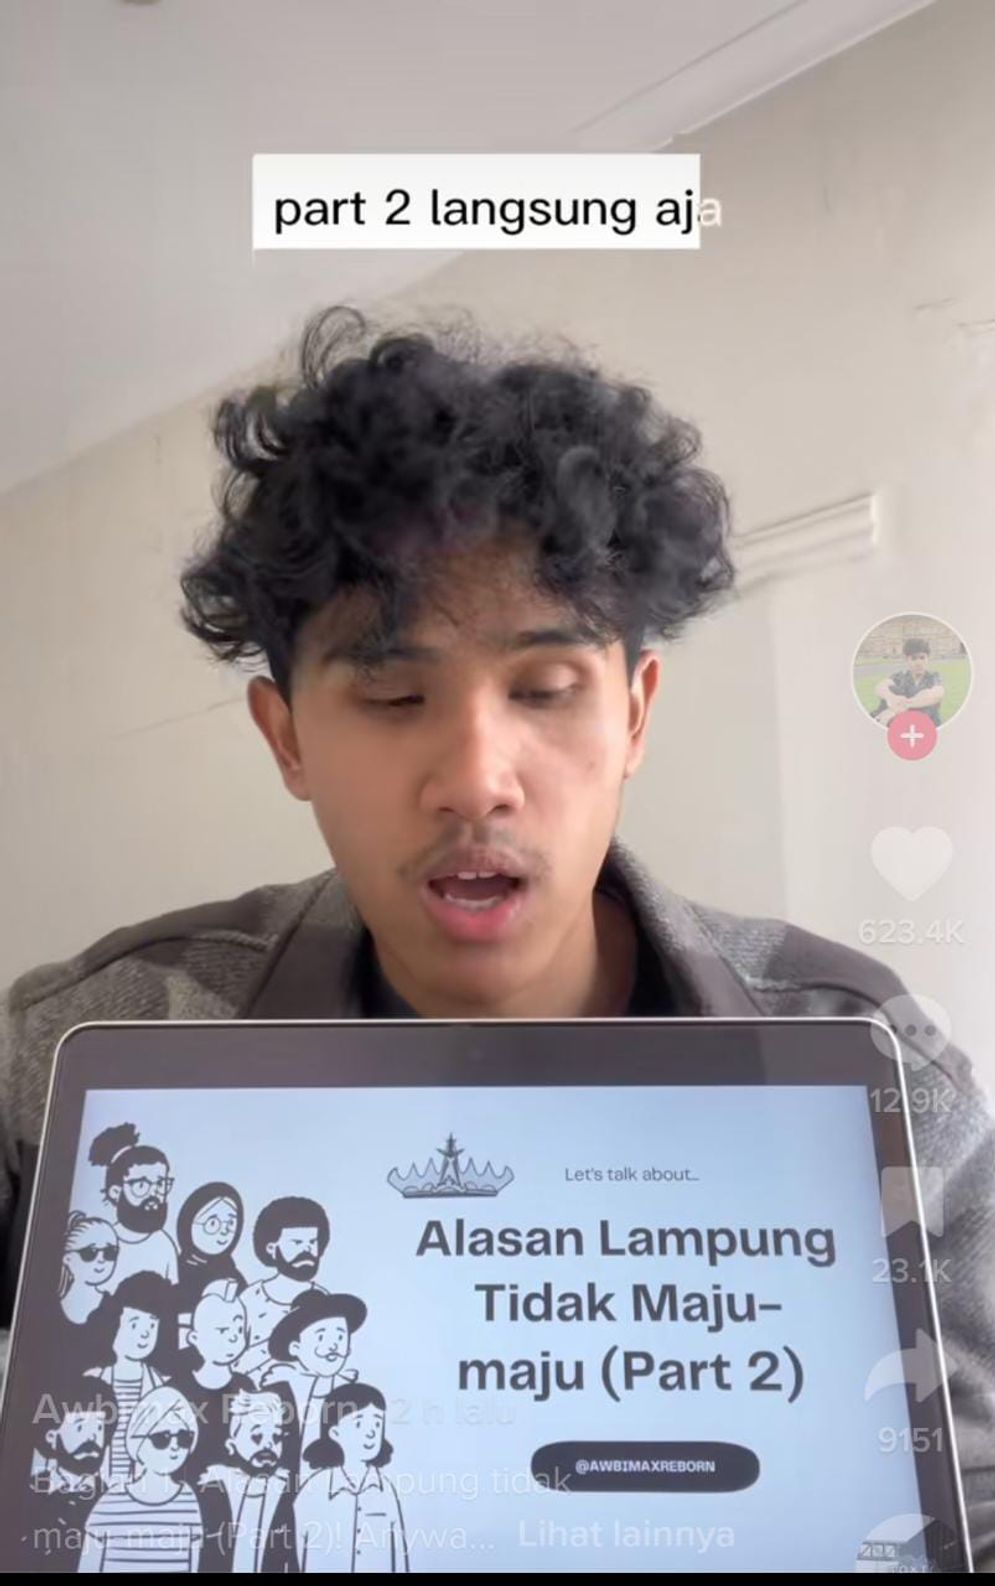 AJI-LBH Bandar Lampung: Pengaduan TikTokers Bima Yudho ke Polisi Melanggar Kebebasan Berpendapat